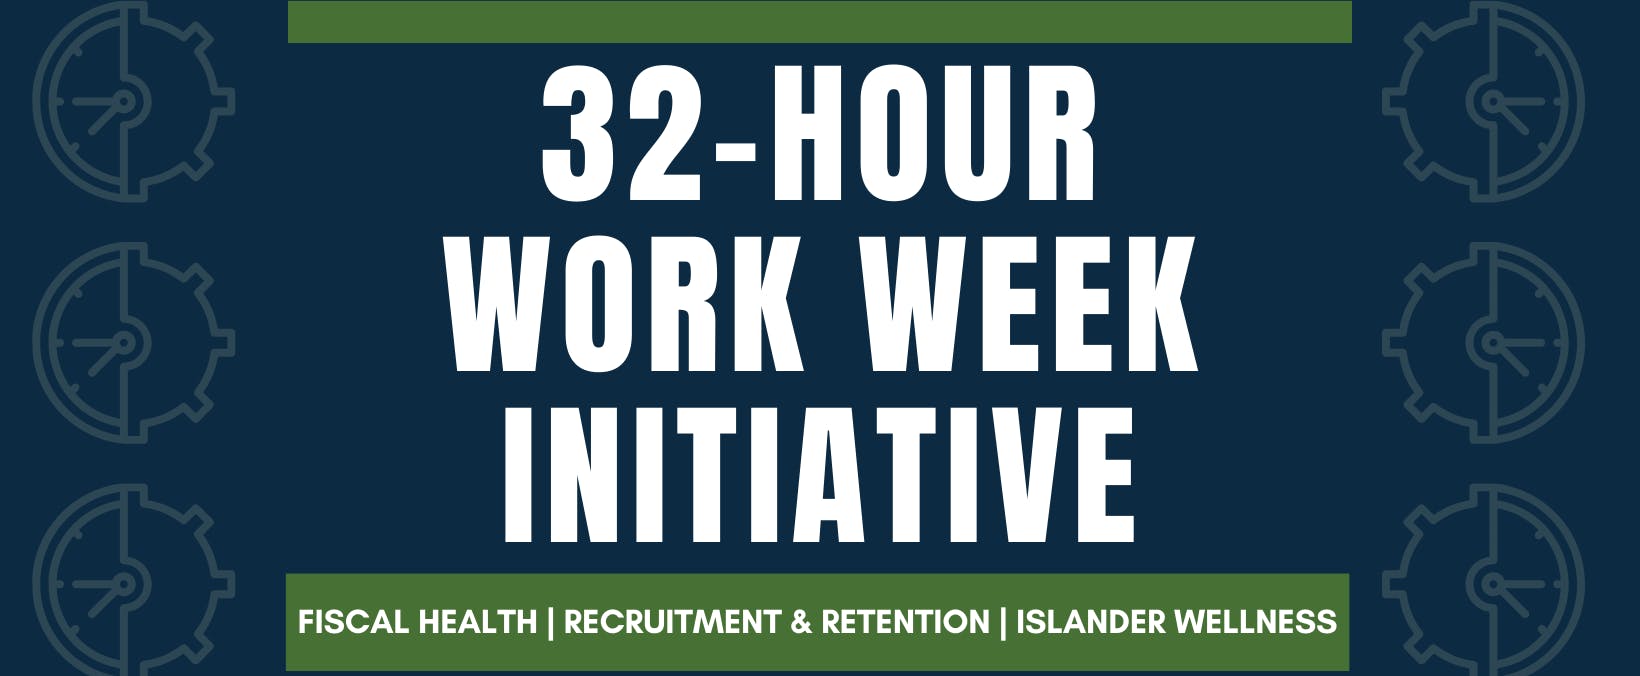 32-hour work week initiative